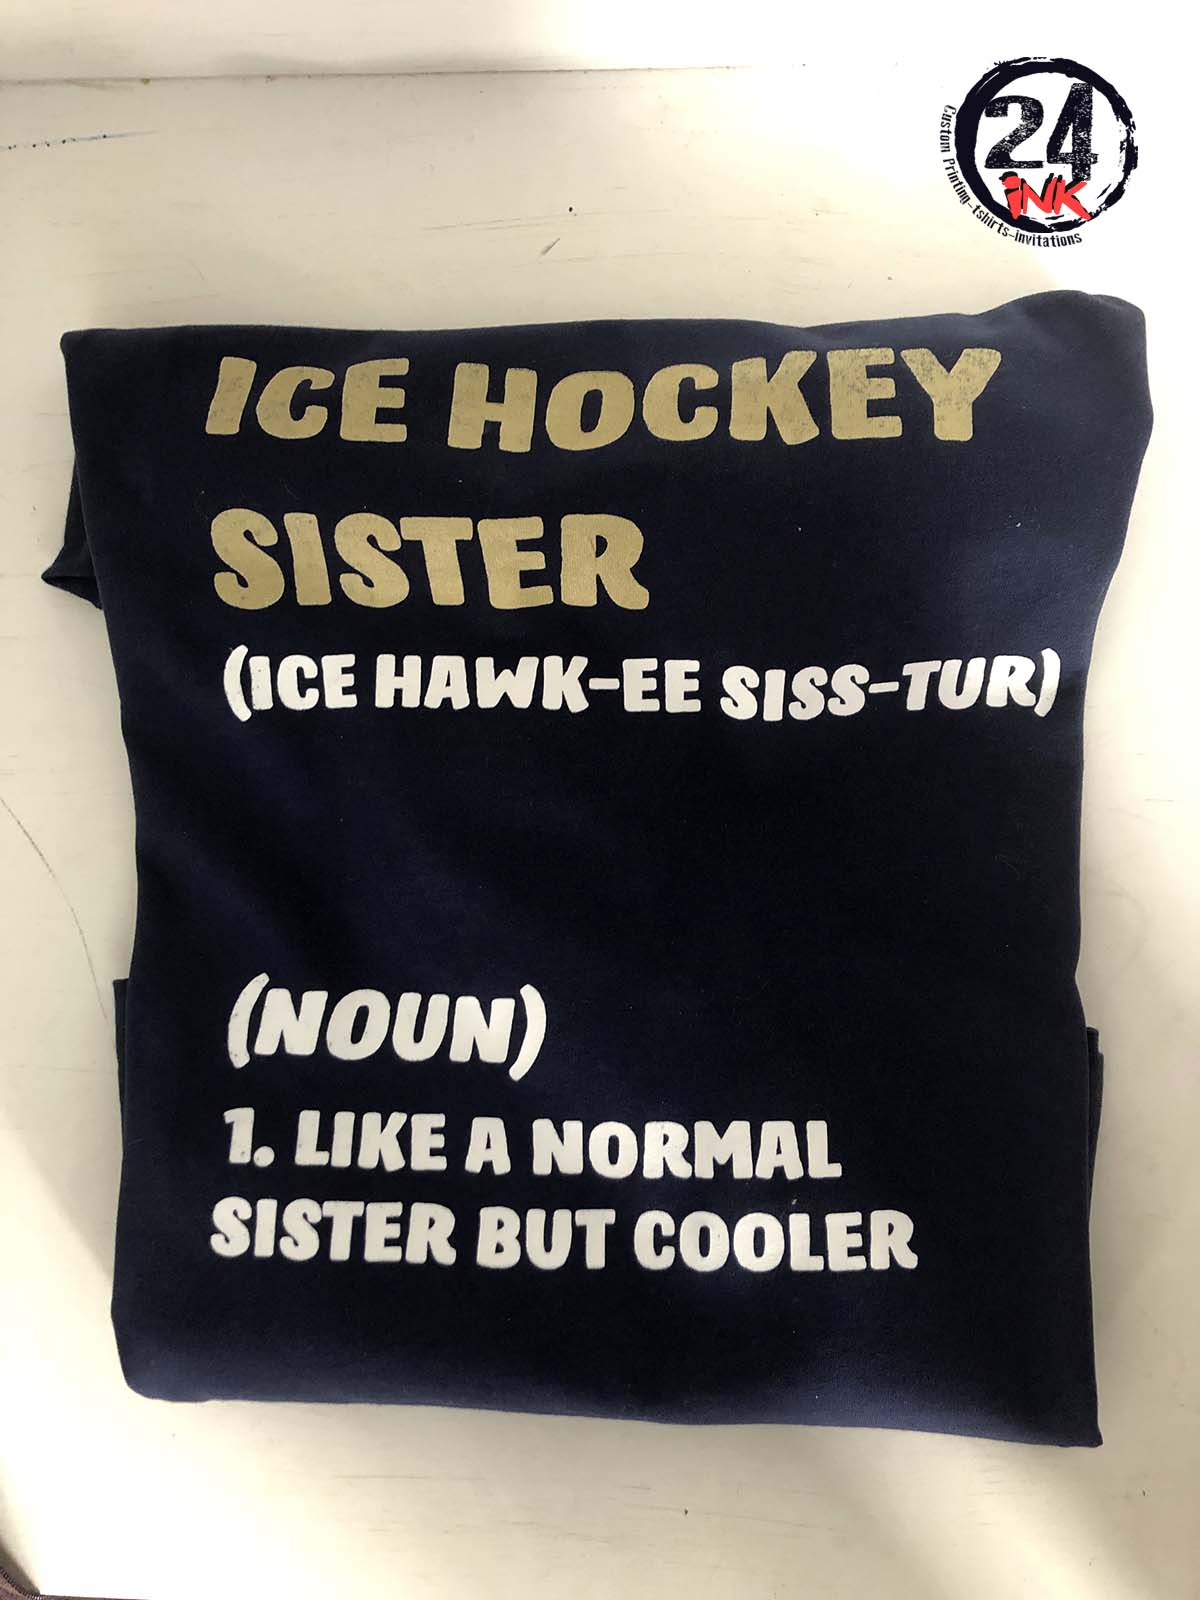 Ice Hockey Sister Shirt